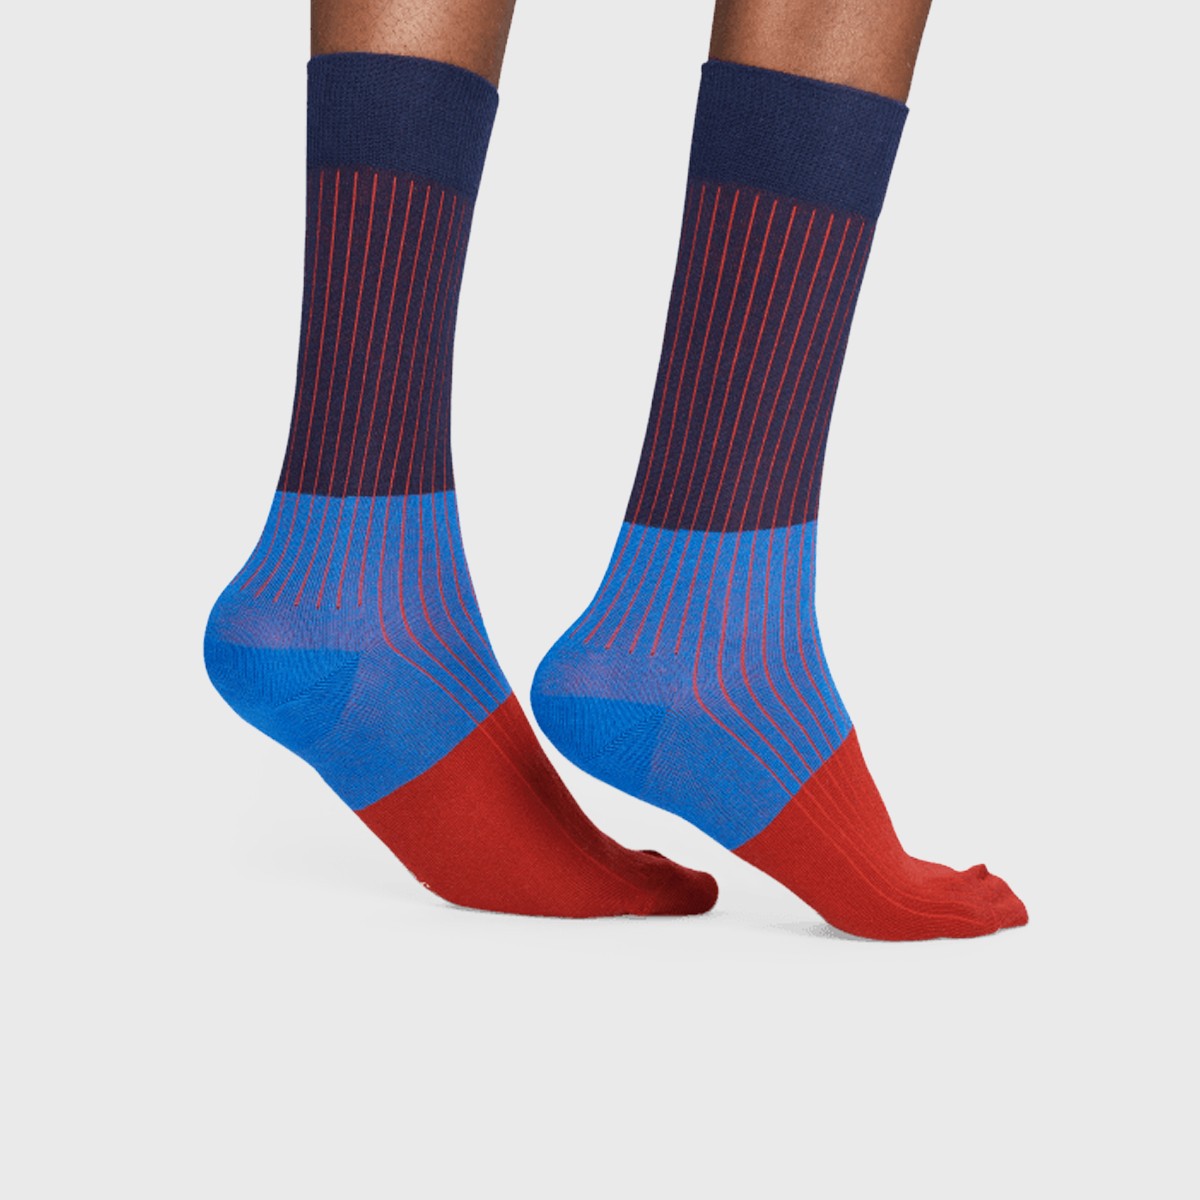 Meia Happy Socks | Listrada